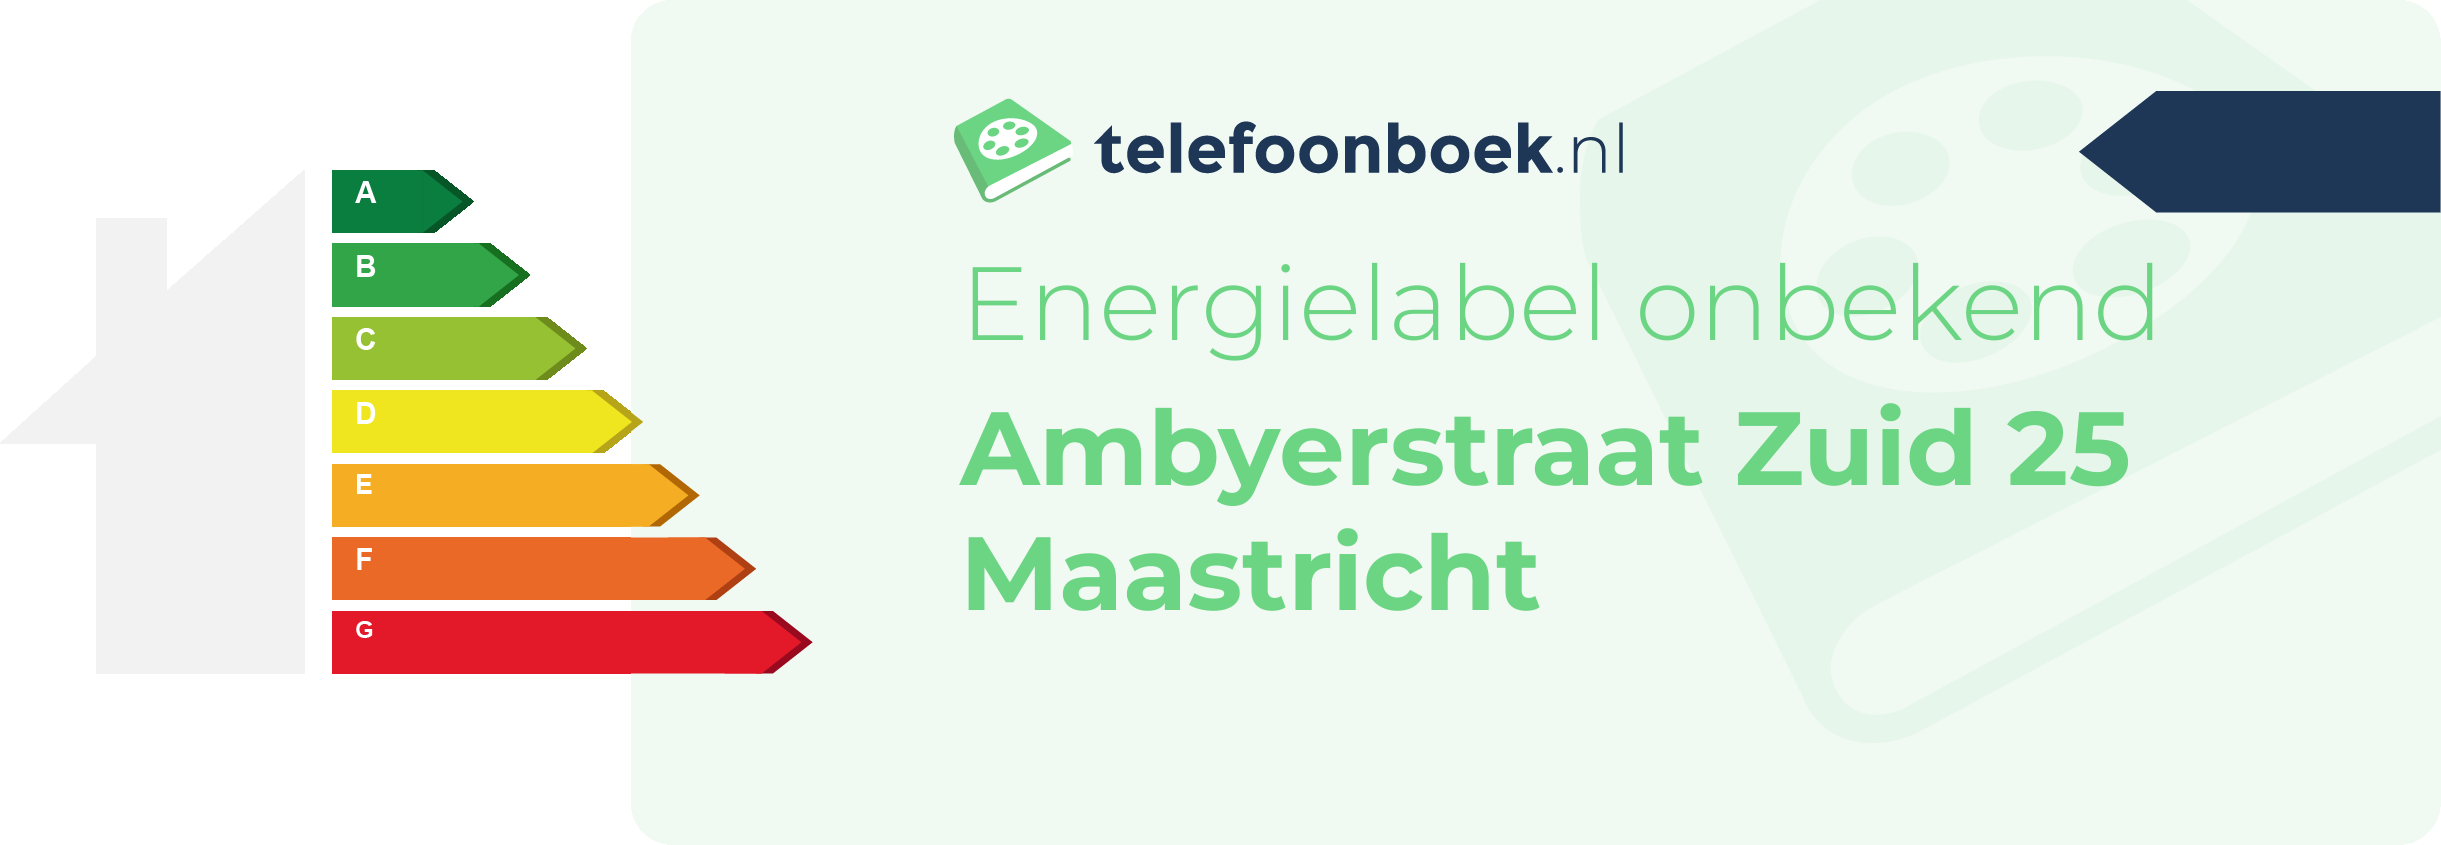 Energielabel Ambyerstraat Zuid 25 Maastricht